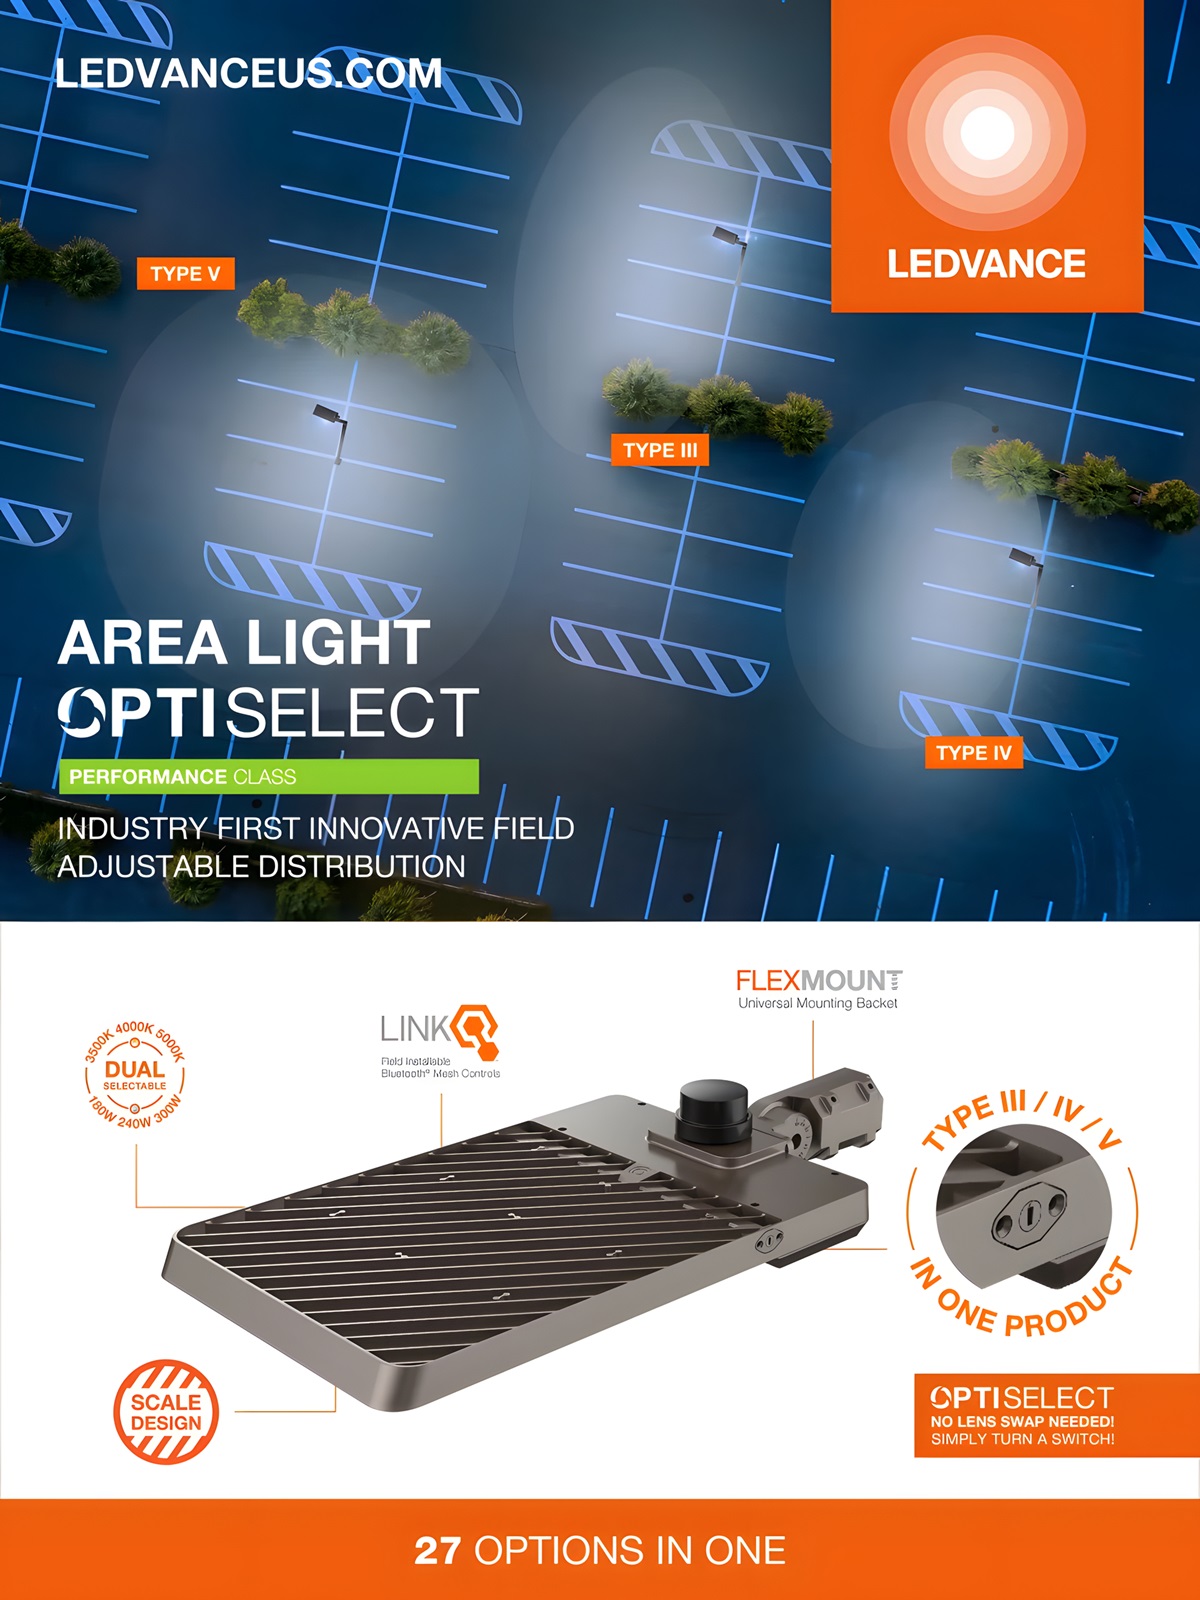 LEDVANCE Introduces OPTI-SELECT Area Light